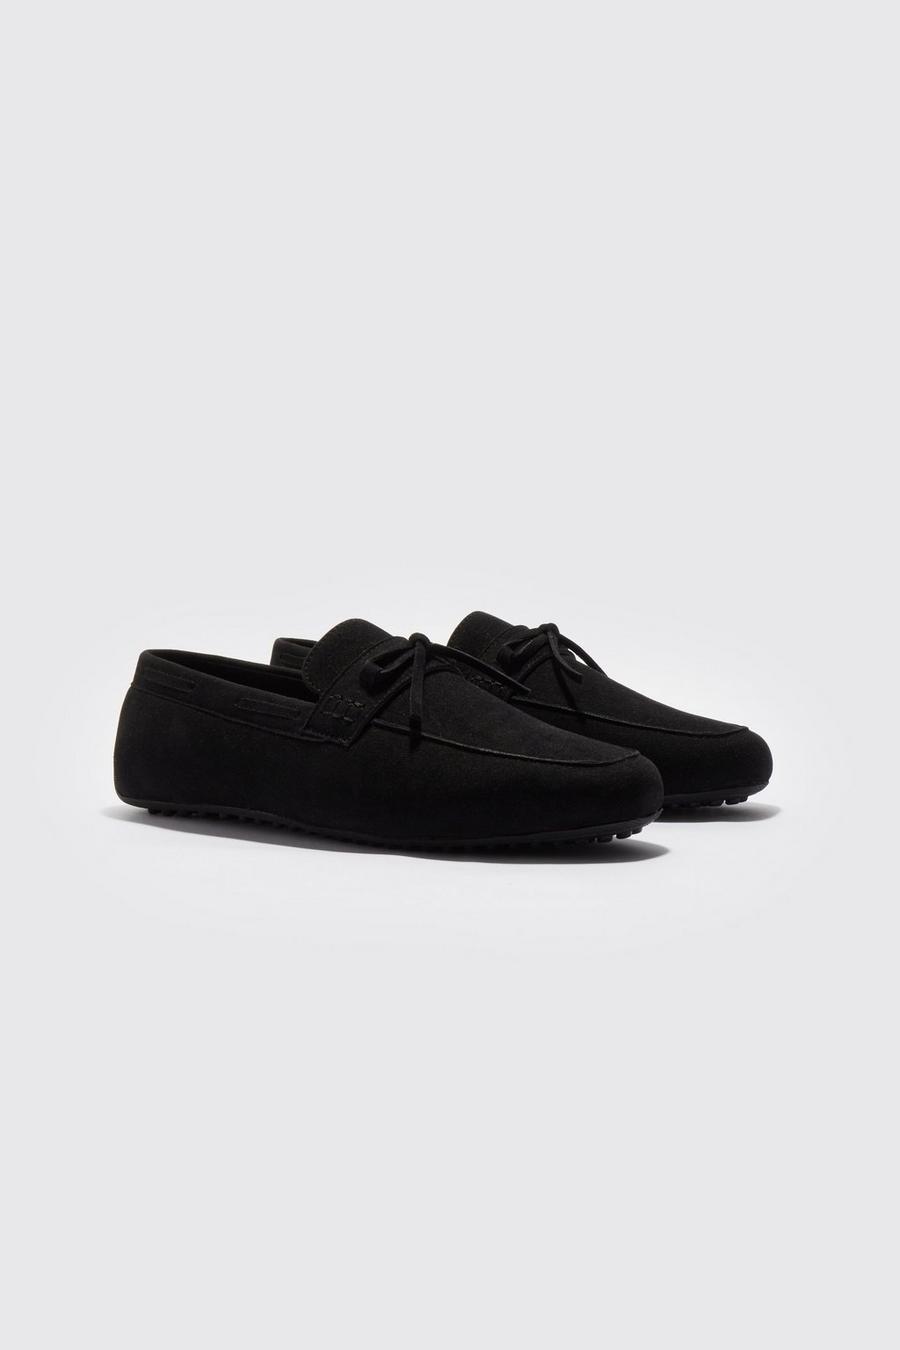 Schuhe aus Wildlederimitat, Black noir